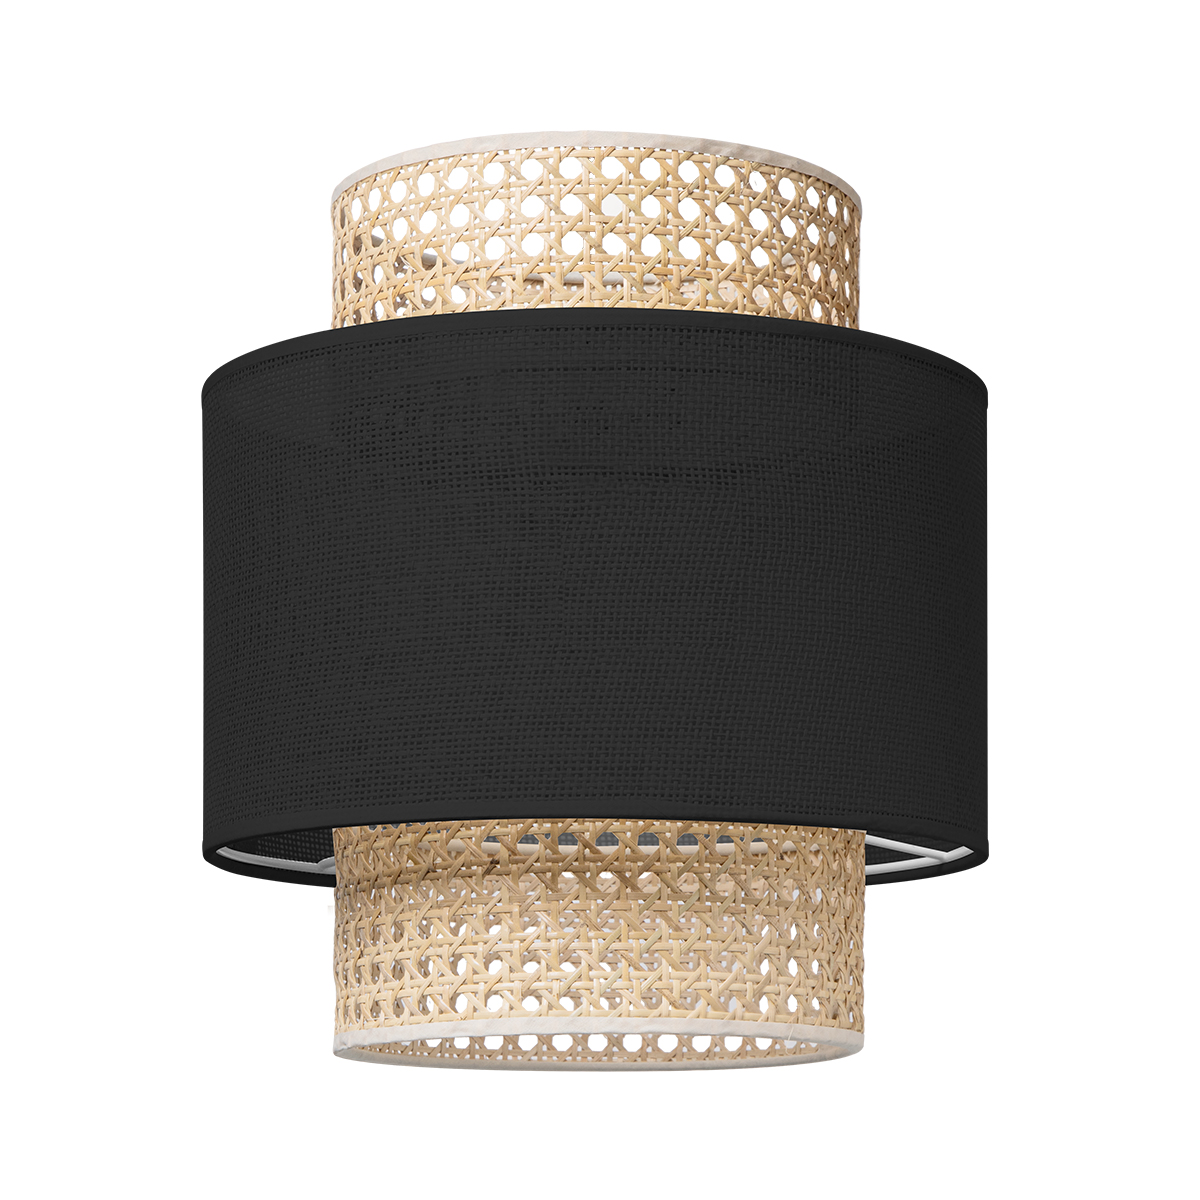 Tangla lighting - TLS7013-01BNT - Lampshade - natural - paper rattan and black linen - chimney - diameter 30cm - E27